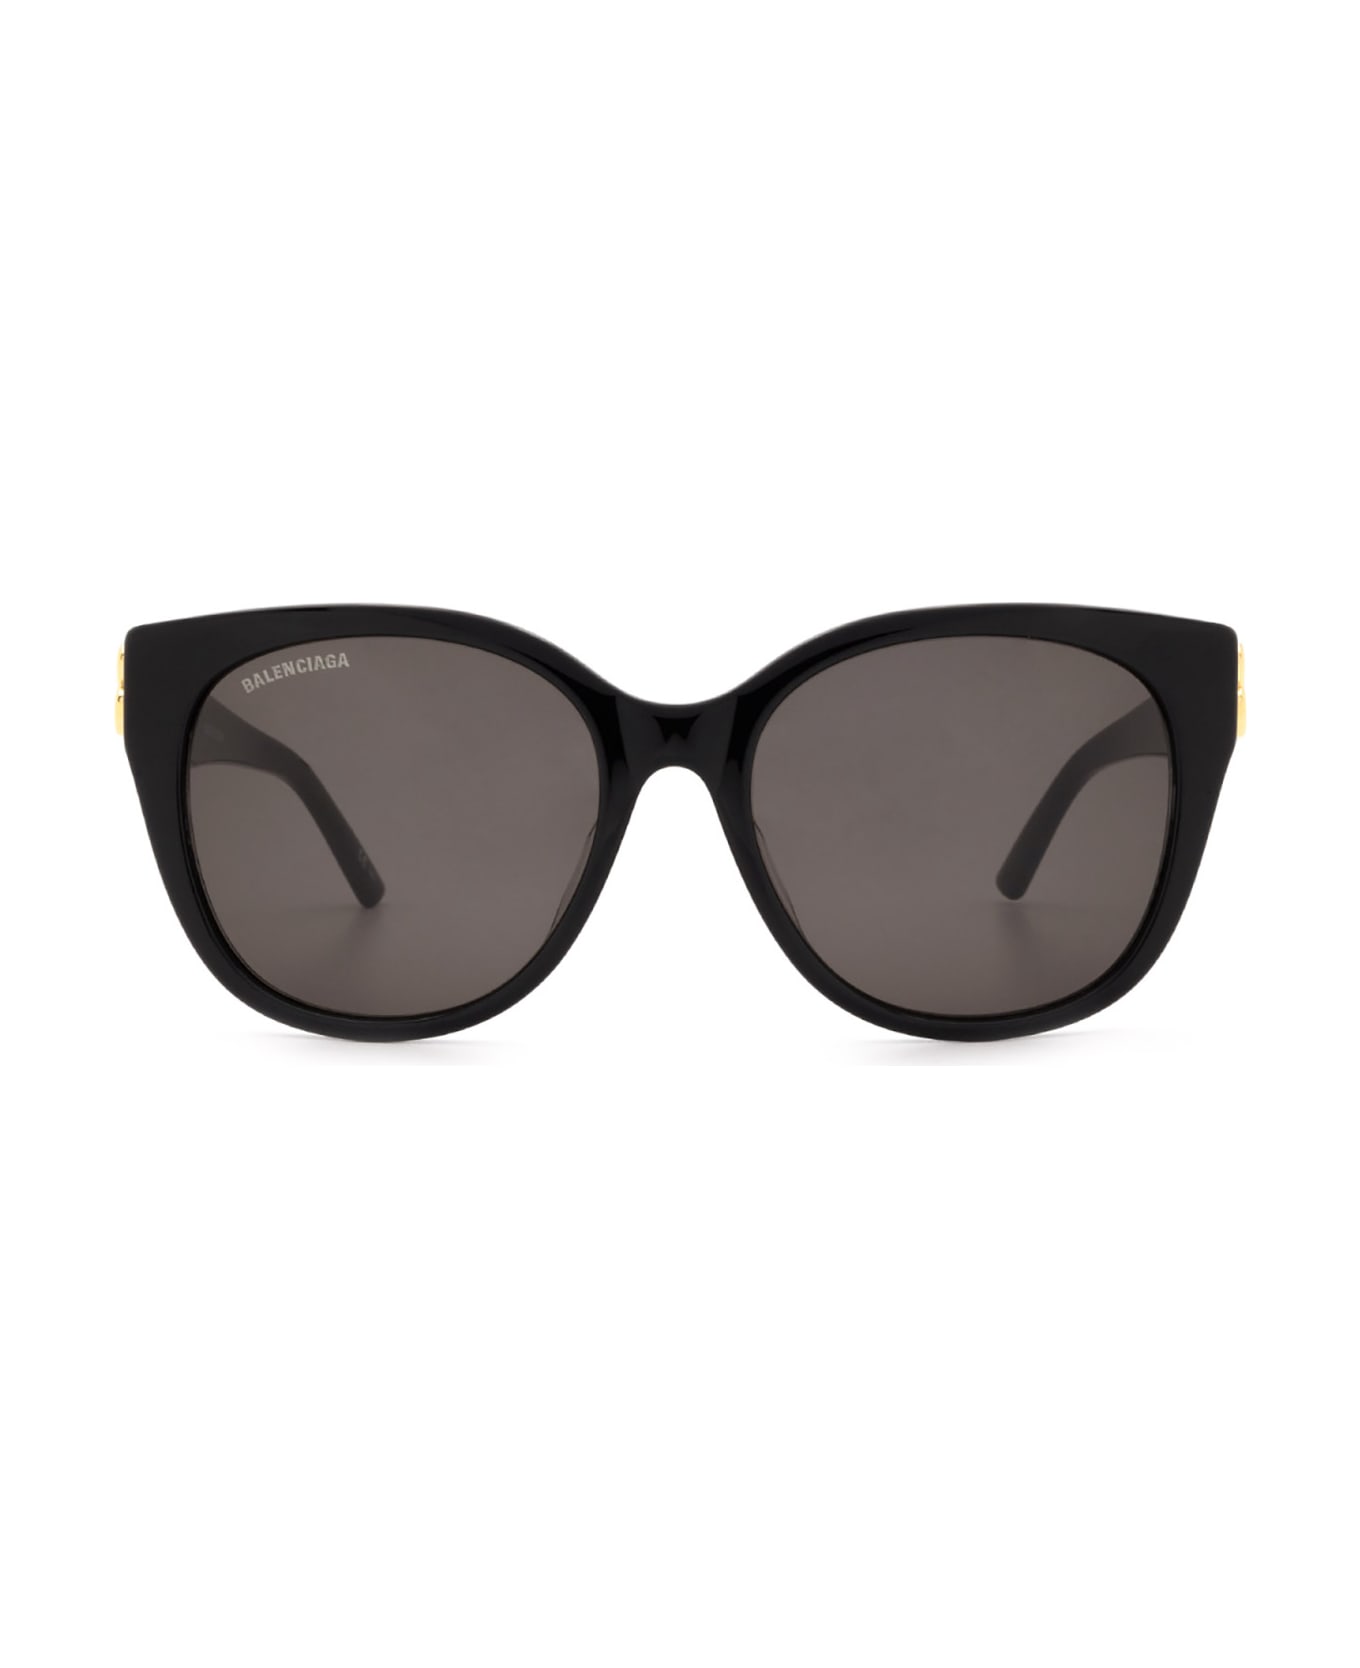 Balenciaga Eyewear Bb0103sa Sunglasses - Black Gold Grey